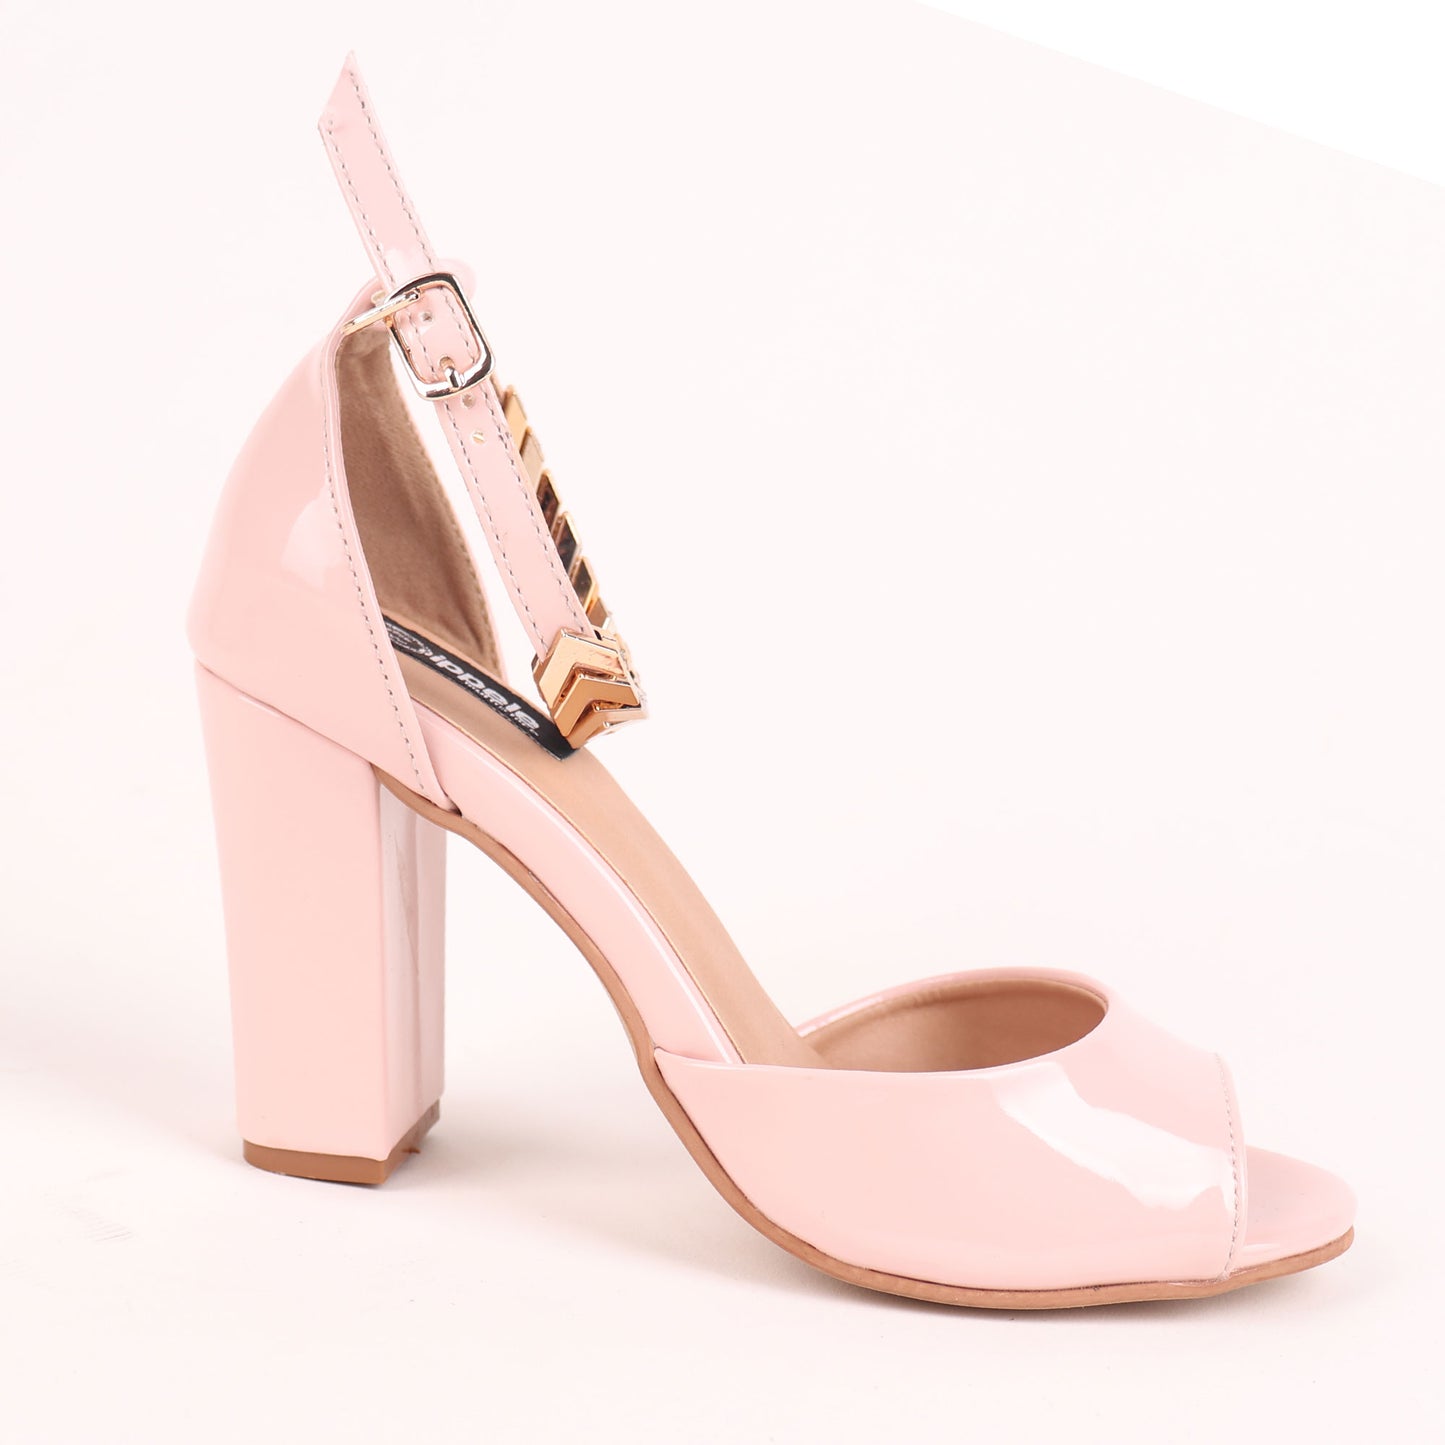 Foot Wear,The Aesthetic Pink Block Heel - Cippele Multi Store